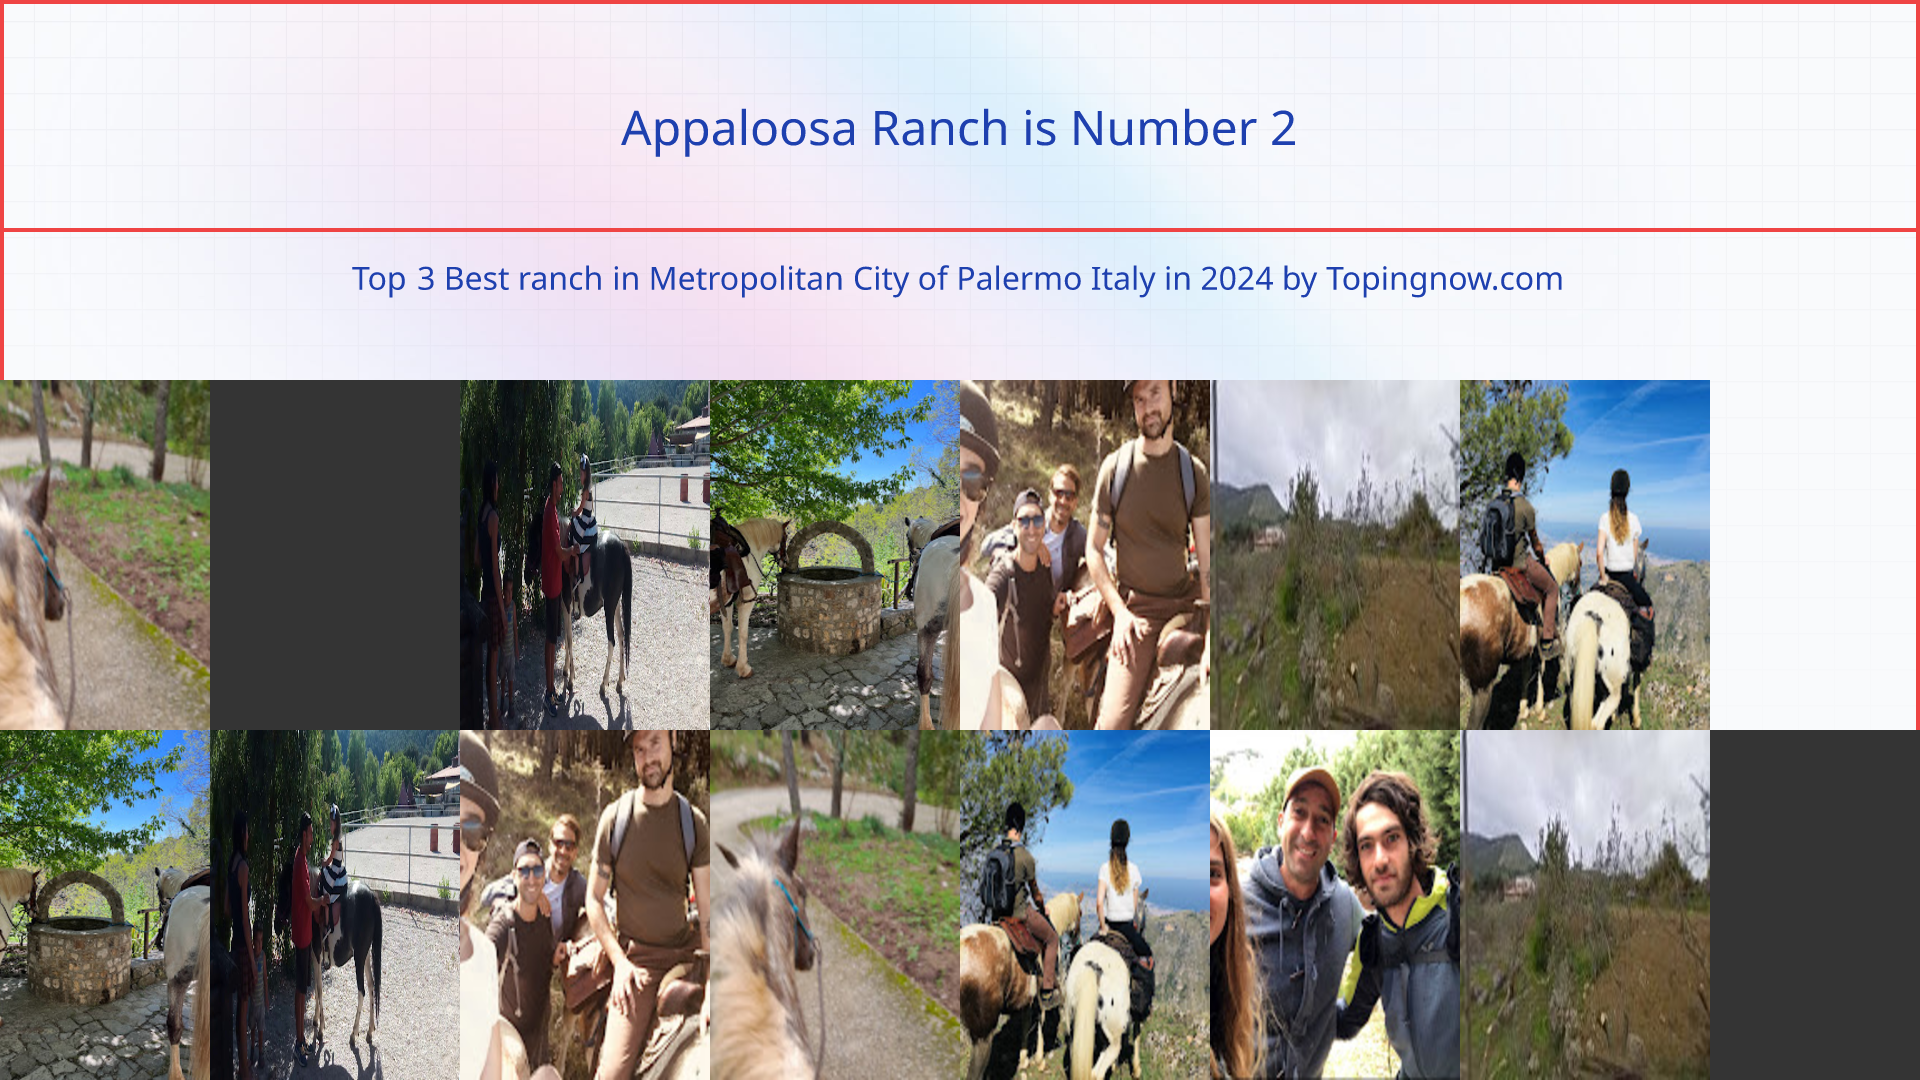 Appaloosa Ranch: Top 3 Best ranch in Metropolitan City of Palermo Italy in 2024